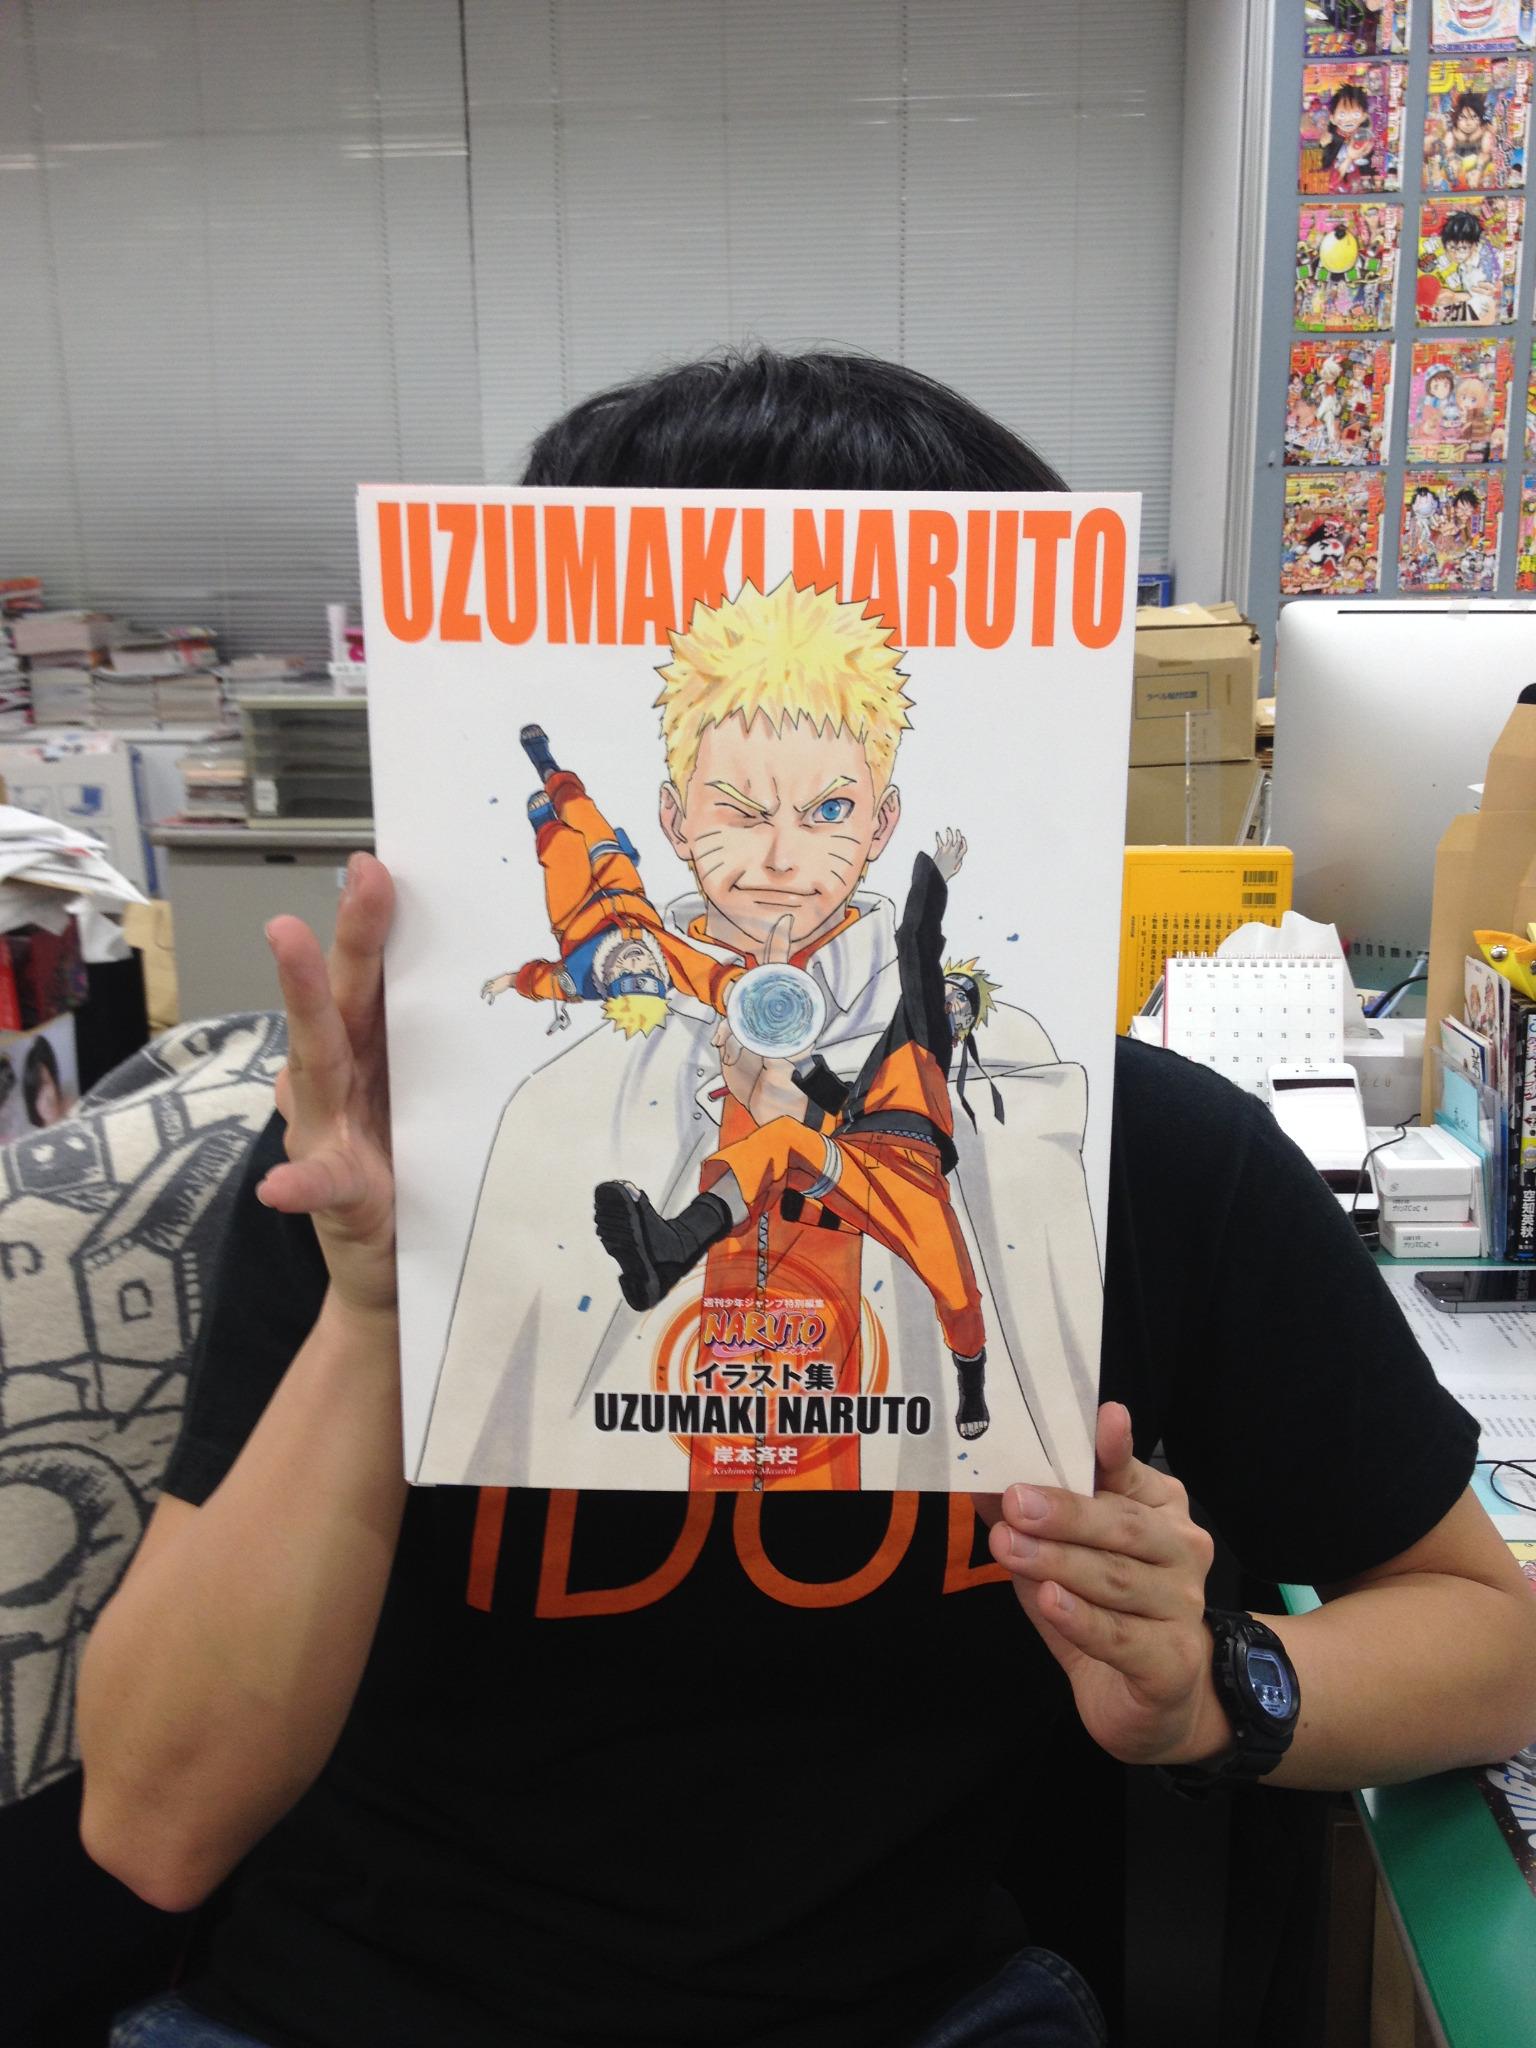 Naruto Boruto 原作公式 最終72巻と２月４日に同時発売のイラスト集 Uzumaki Naruto カバーの裏はもちろん 初版特典でjcシールがついてくるので お買い求めはお早めに 写真はイラスト集を持つまなべえ編集 オオツキ Http T Co Uumnr01i5l